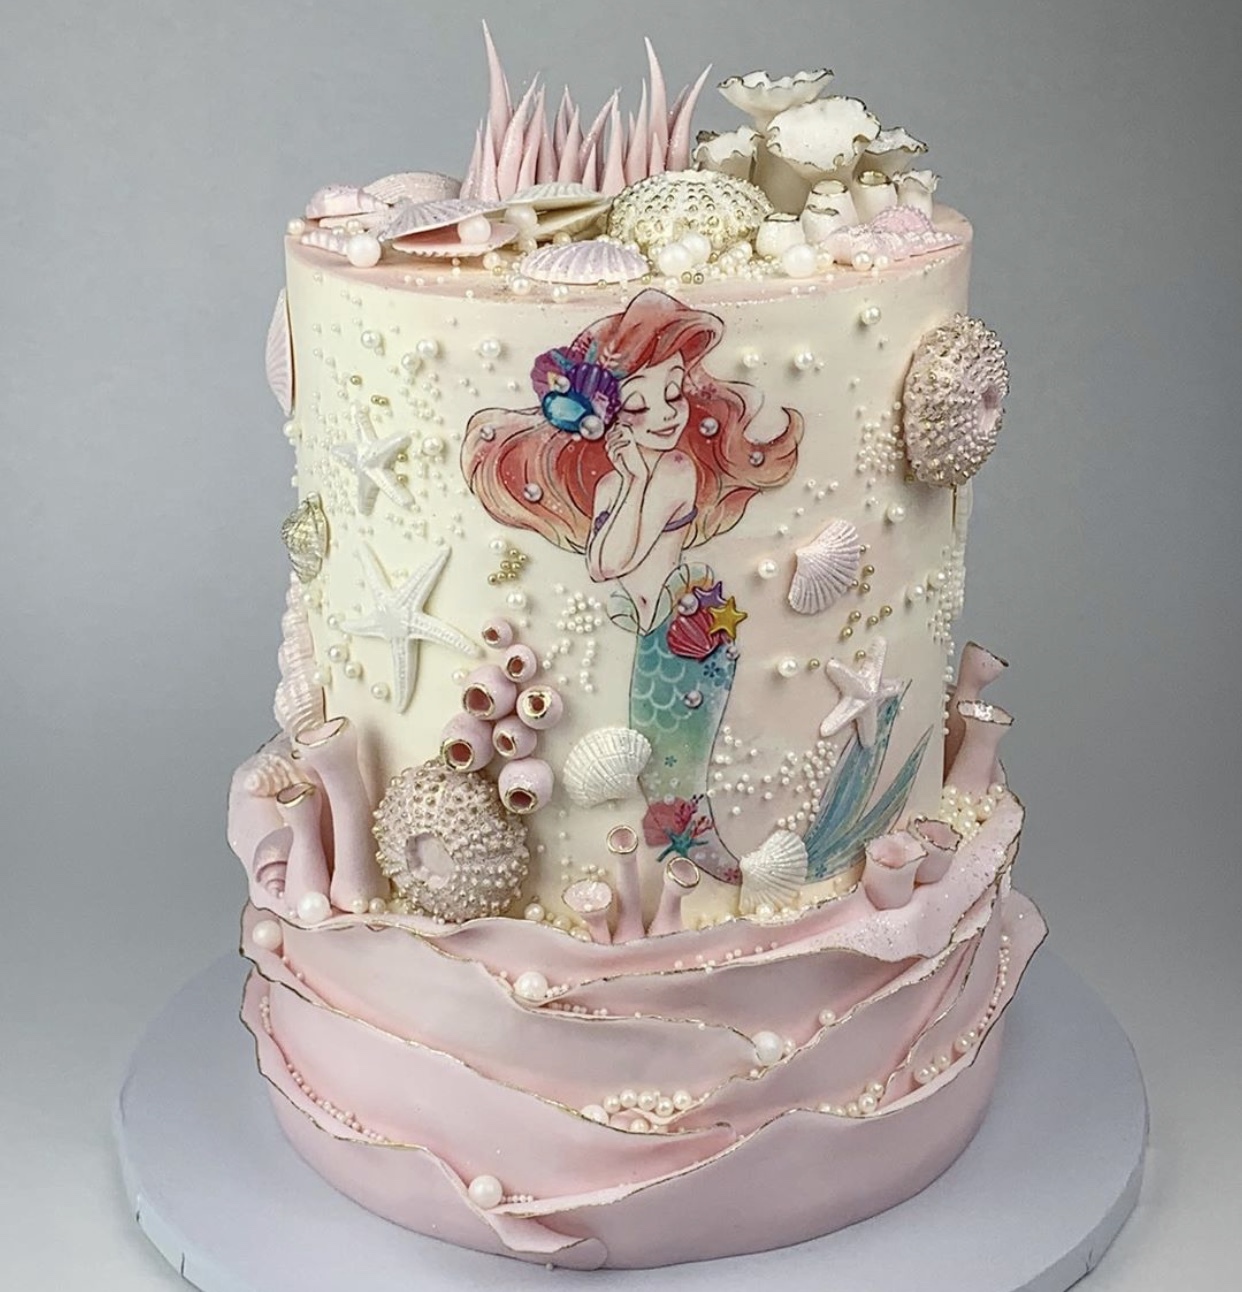 Katy's Kitchen: Mermaid Cake